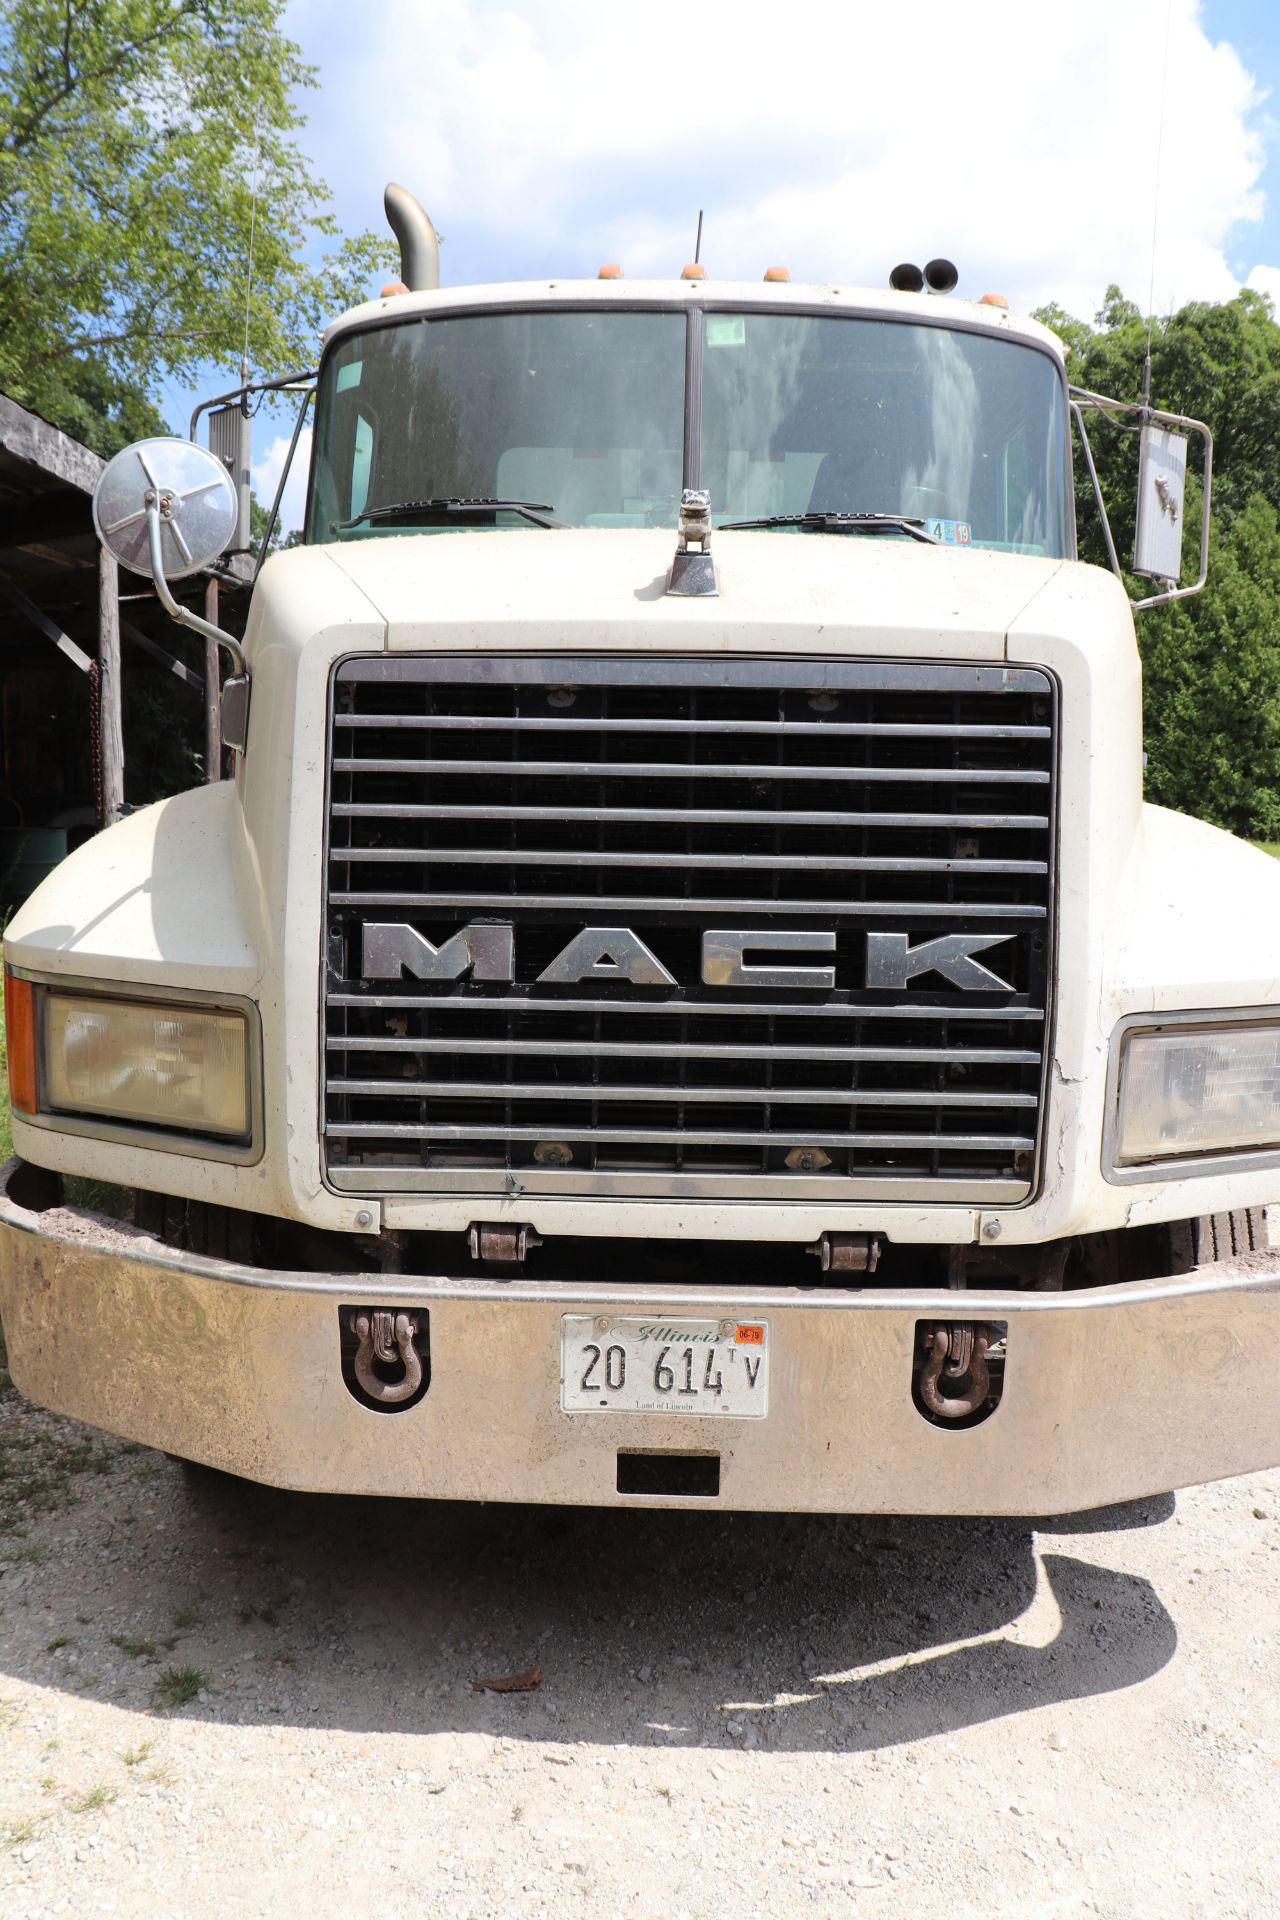 2000 Mack truck, VIN 1M2AA14Y0YW121008, engine #UT301008, model CH613 - Image 4 of 12